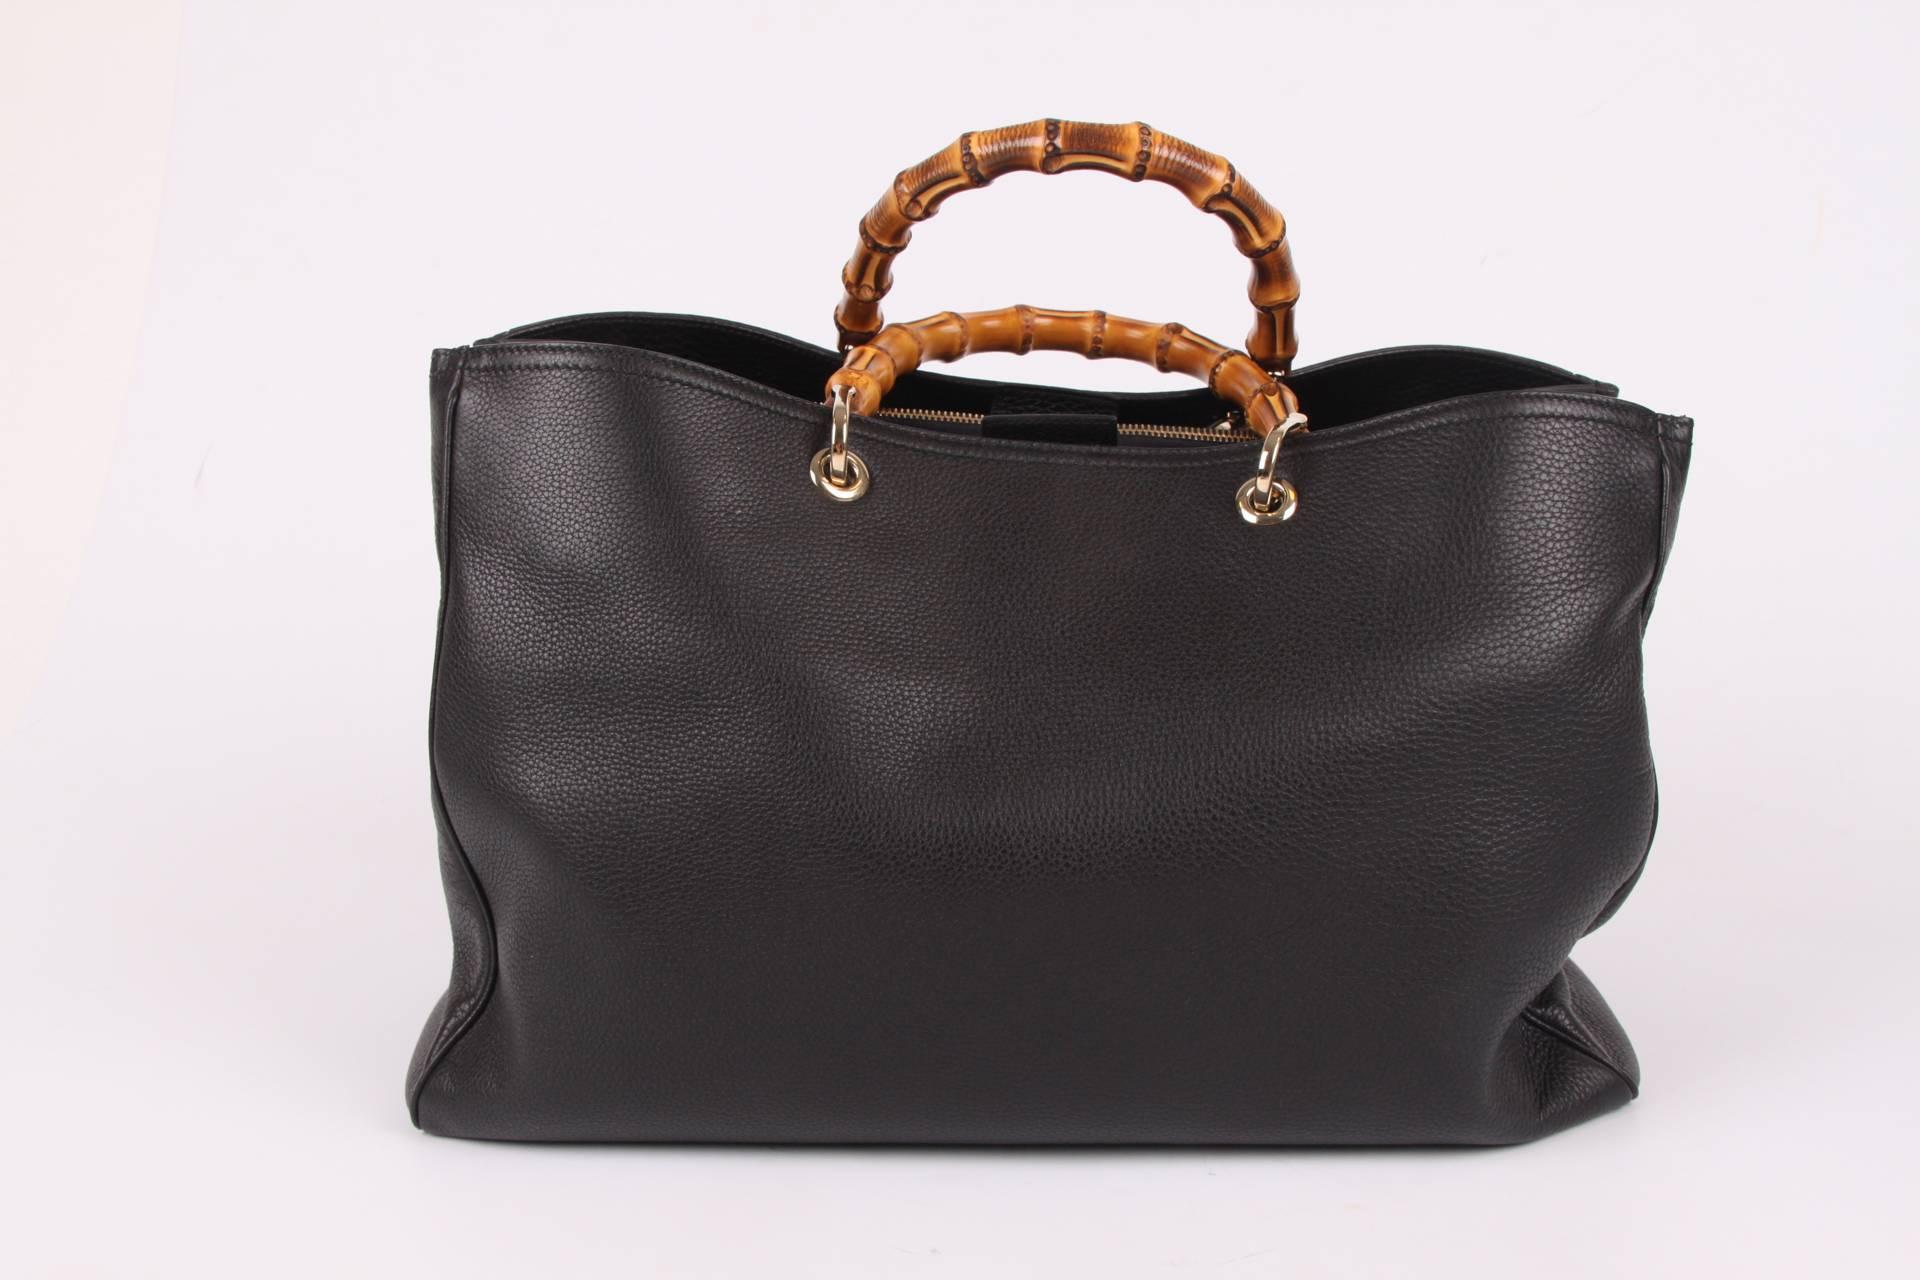 Gucci Bamboo Shopper Tote Bag L - black leather  1